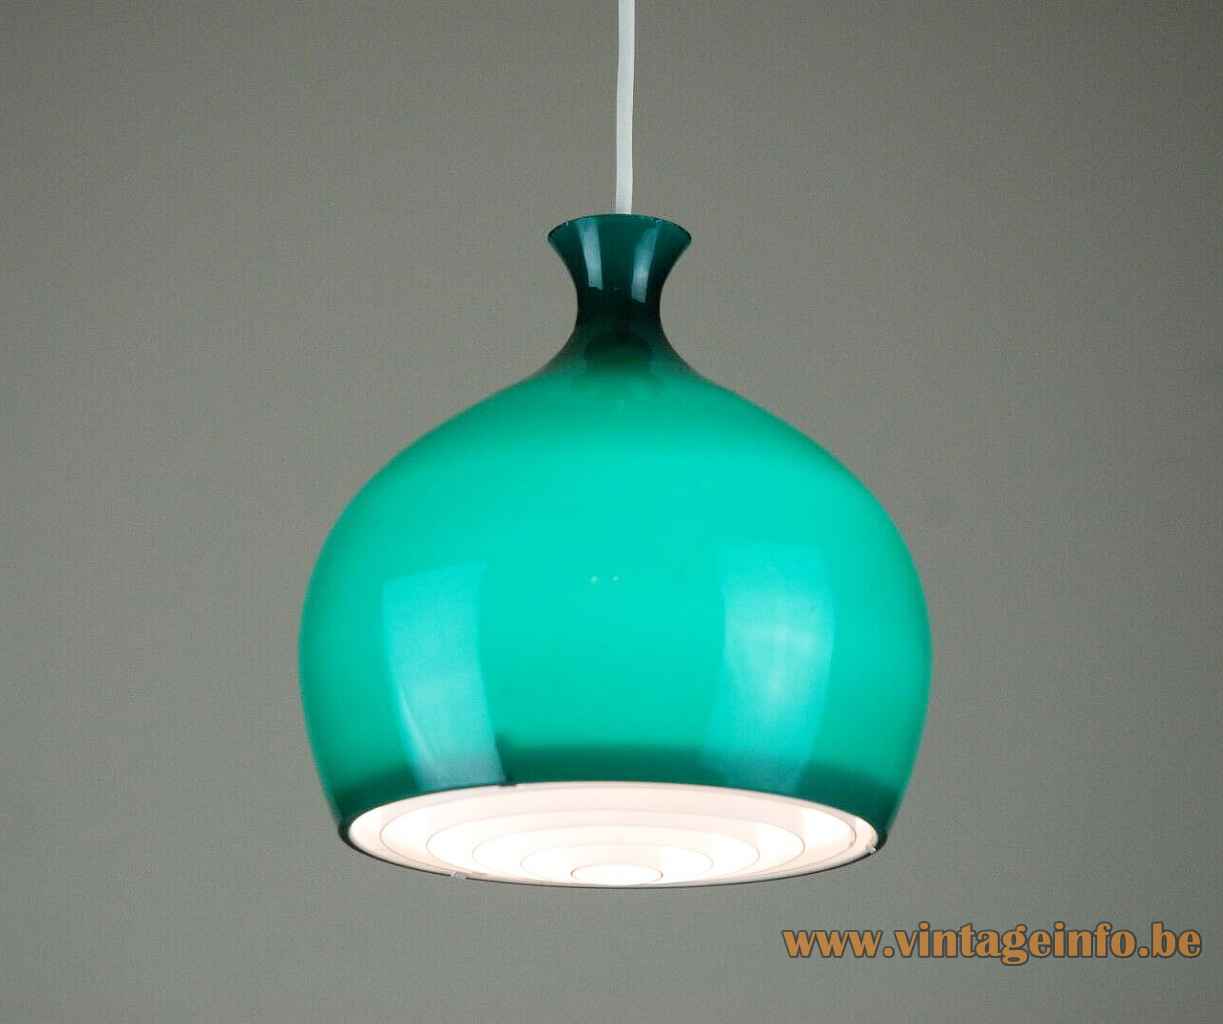 Helge Zimdal Löken pendant lamp green onion shaped glass lampshade 1960s Falkenbergs Belysning Sweden E27 socket